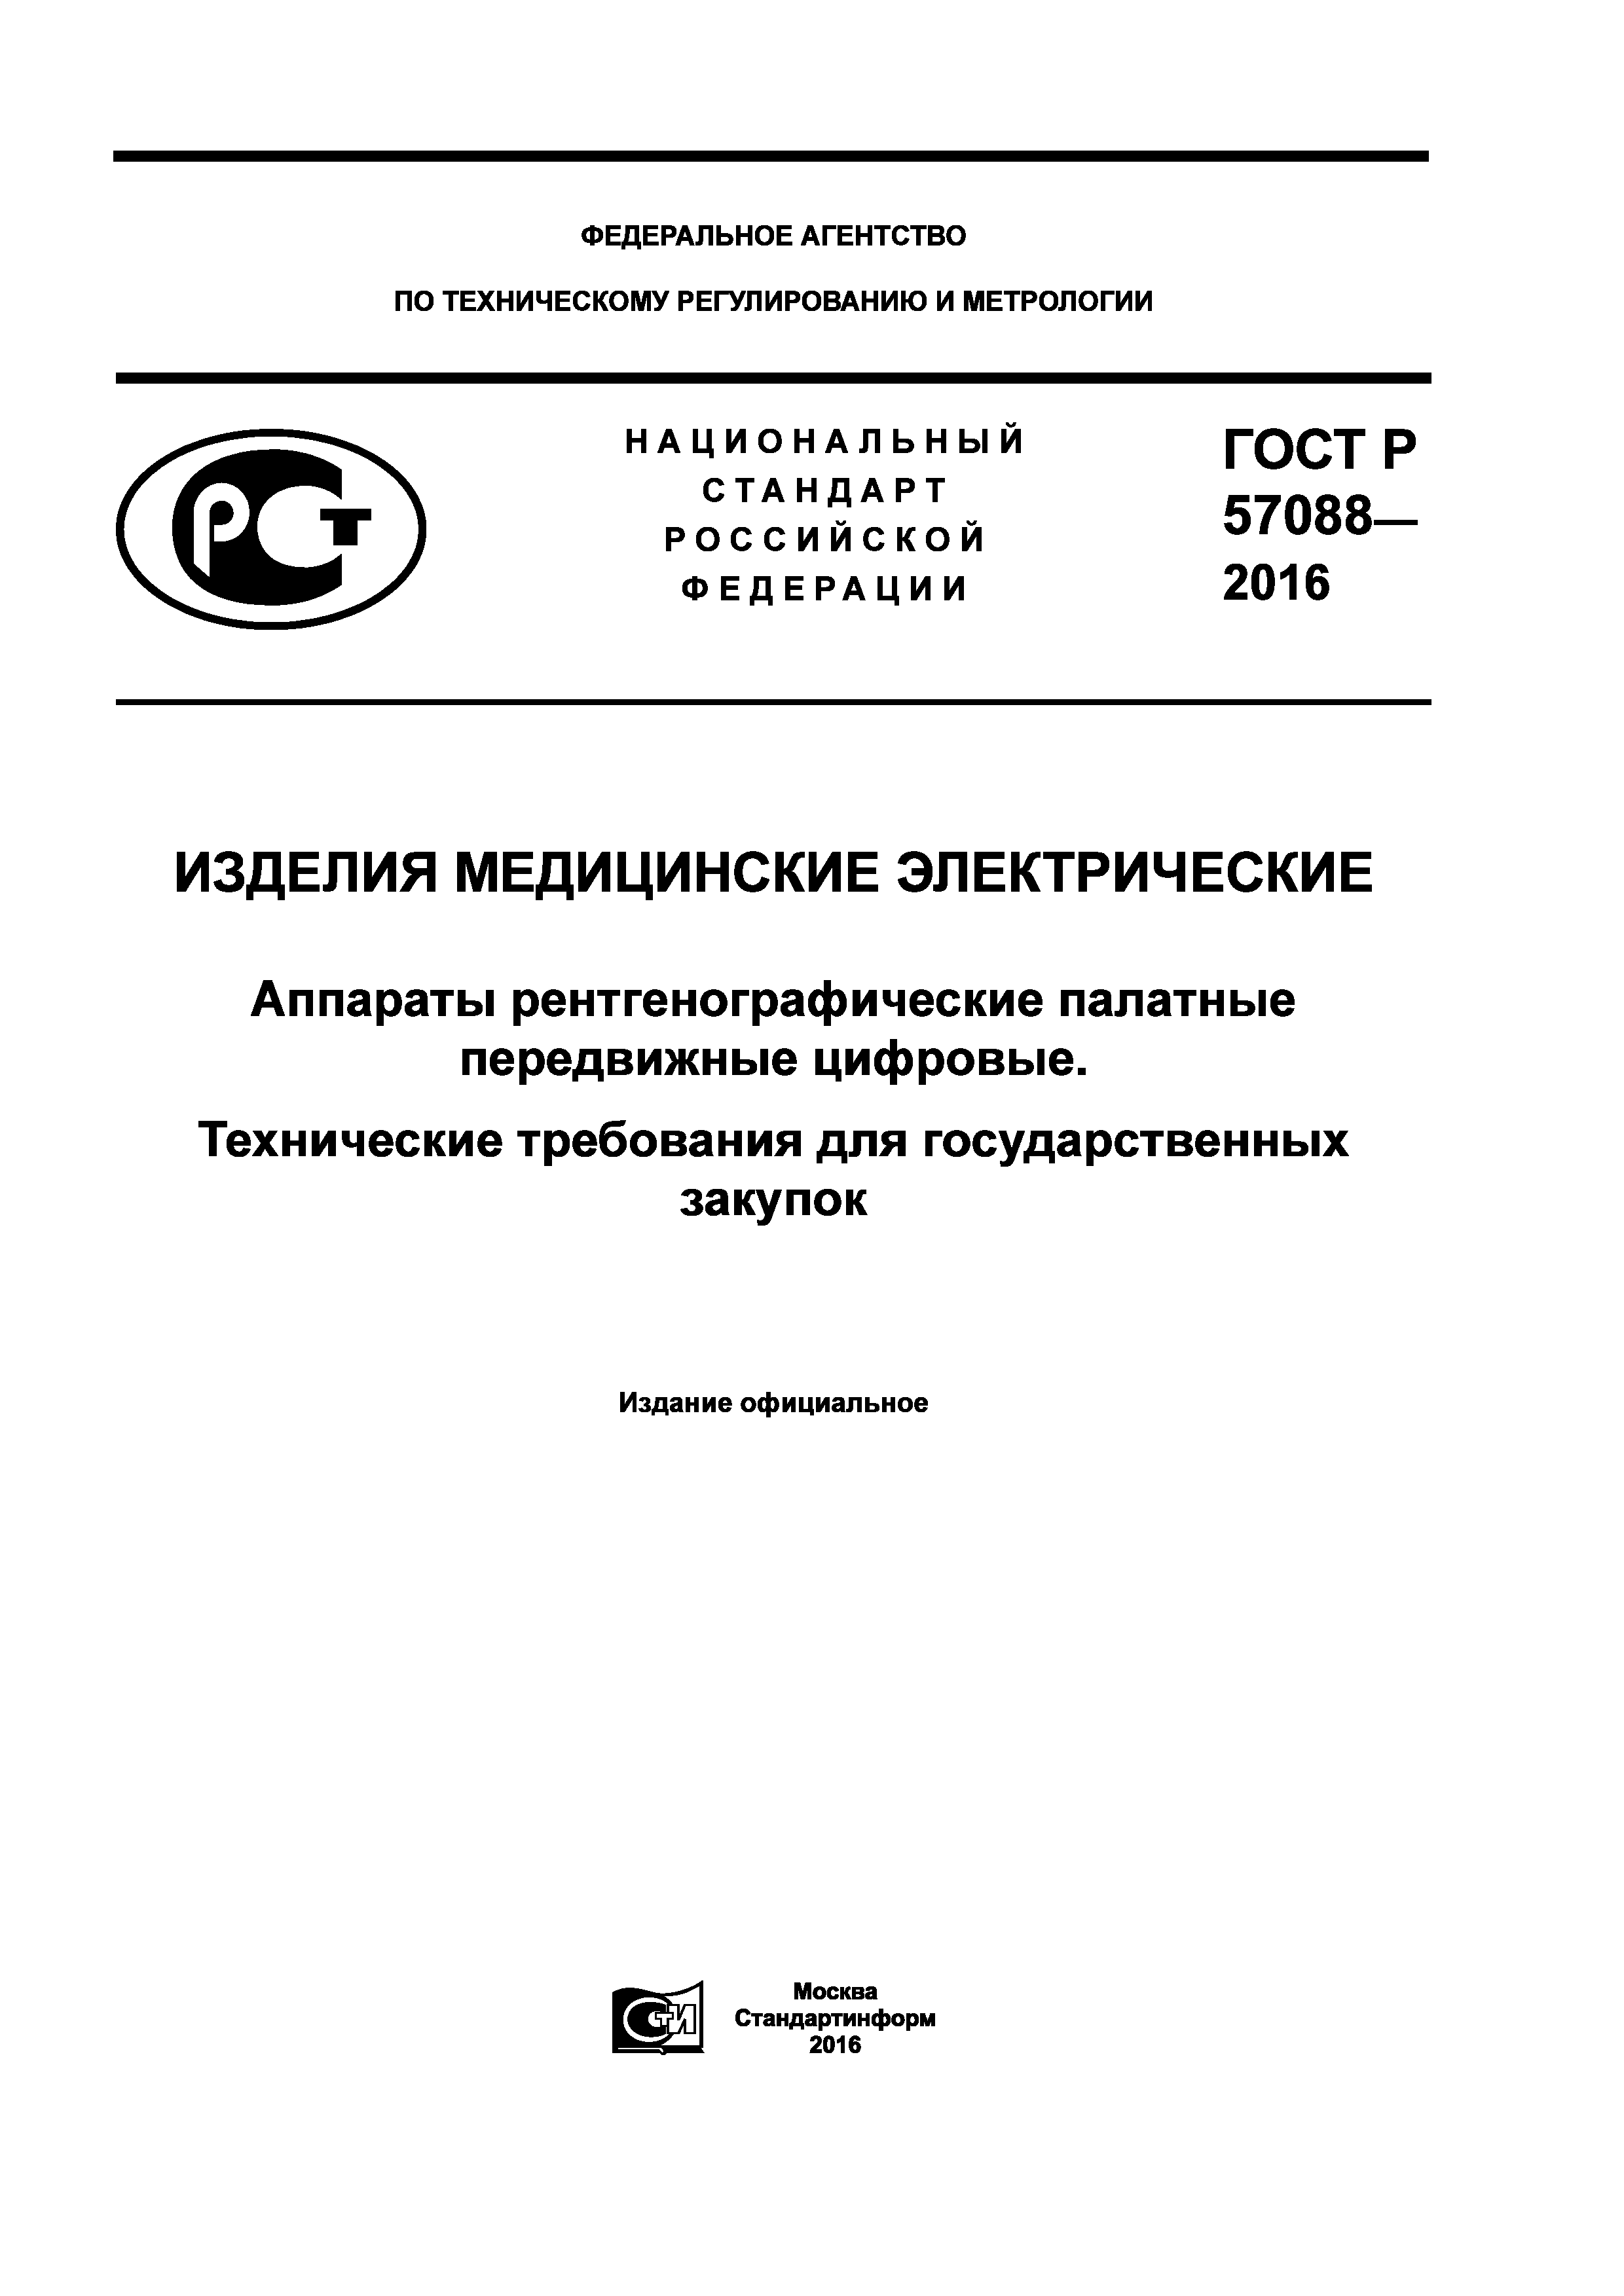 ГОСТ Р 57088-2016